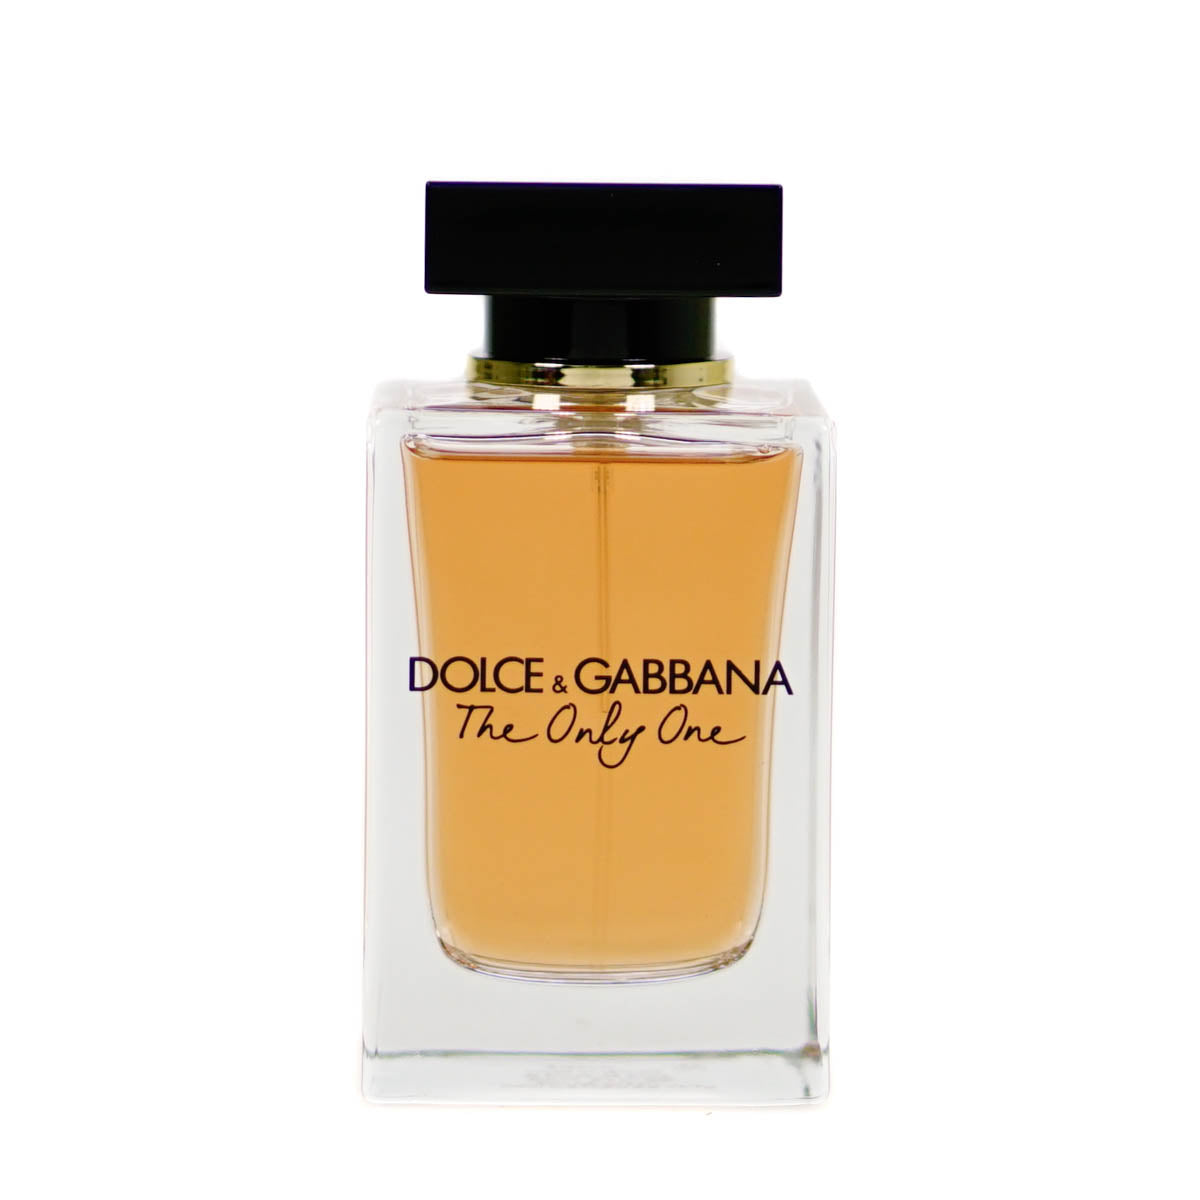 Dolce & Gabbana 100ml The Only One Eau De Parfum